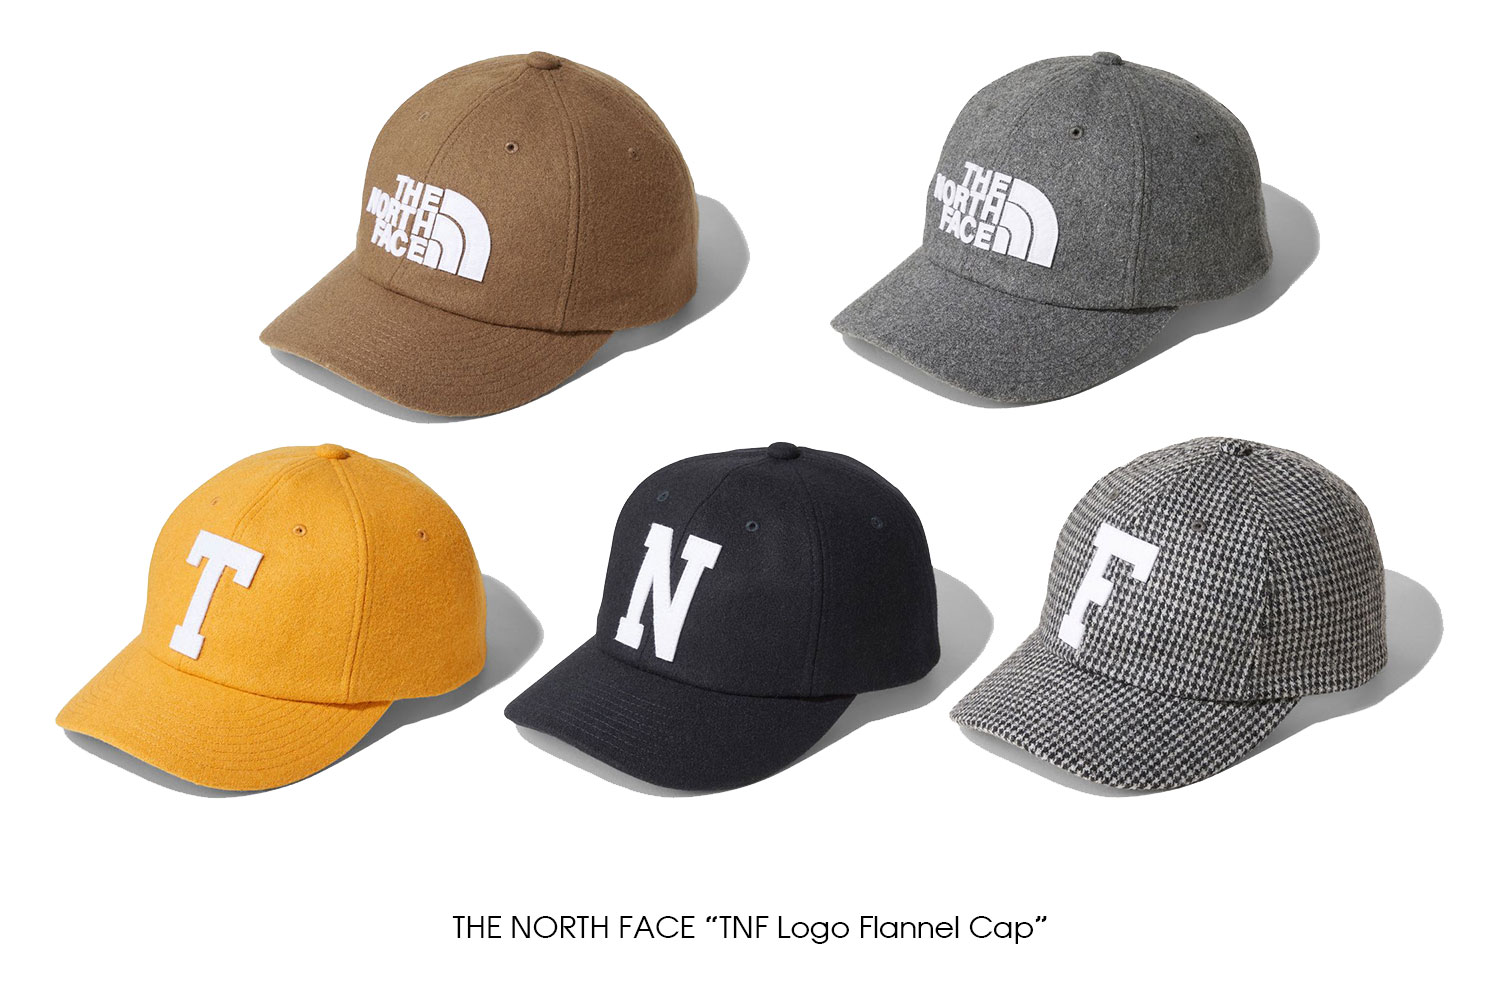 THE NORTH FACE "TNF Logo Flannel Cap"